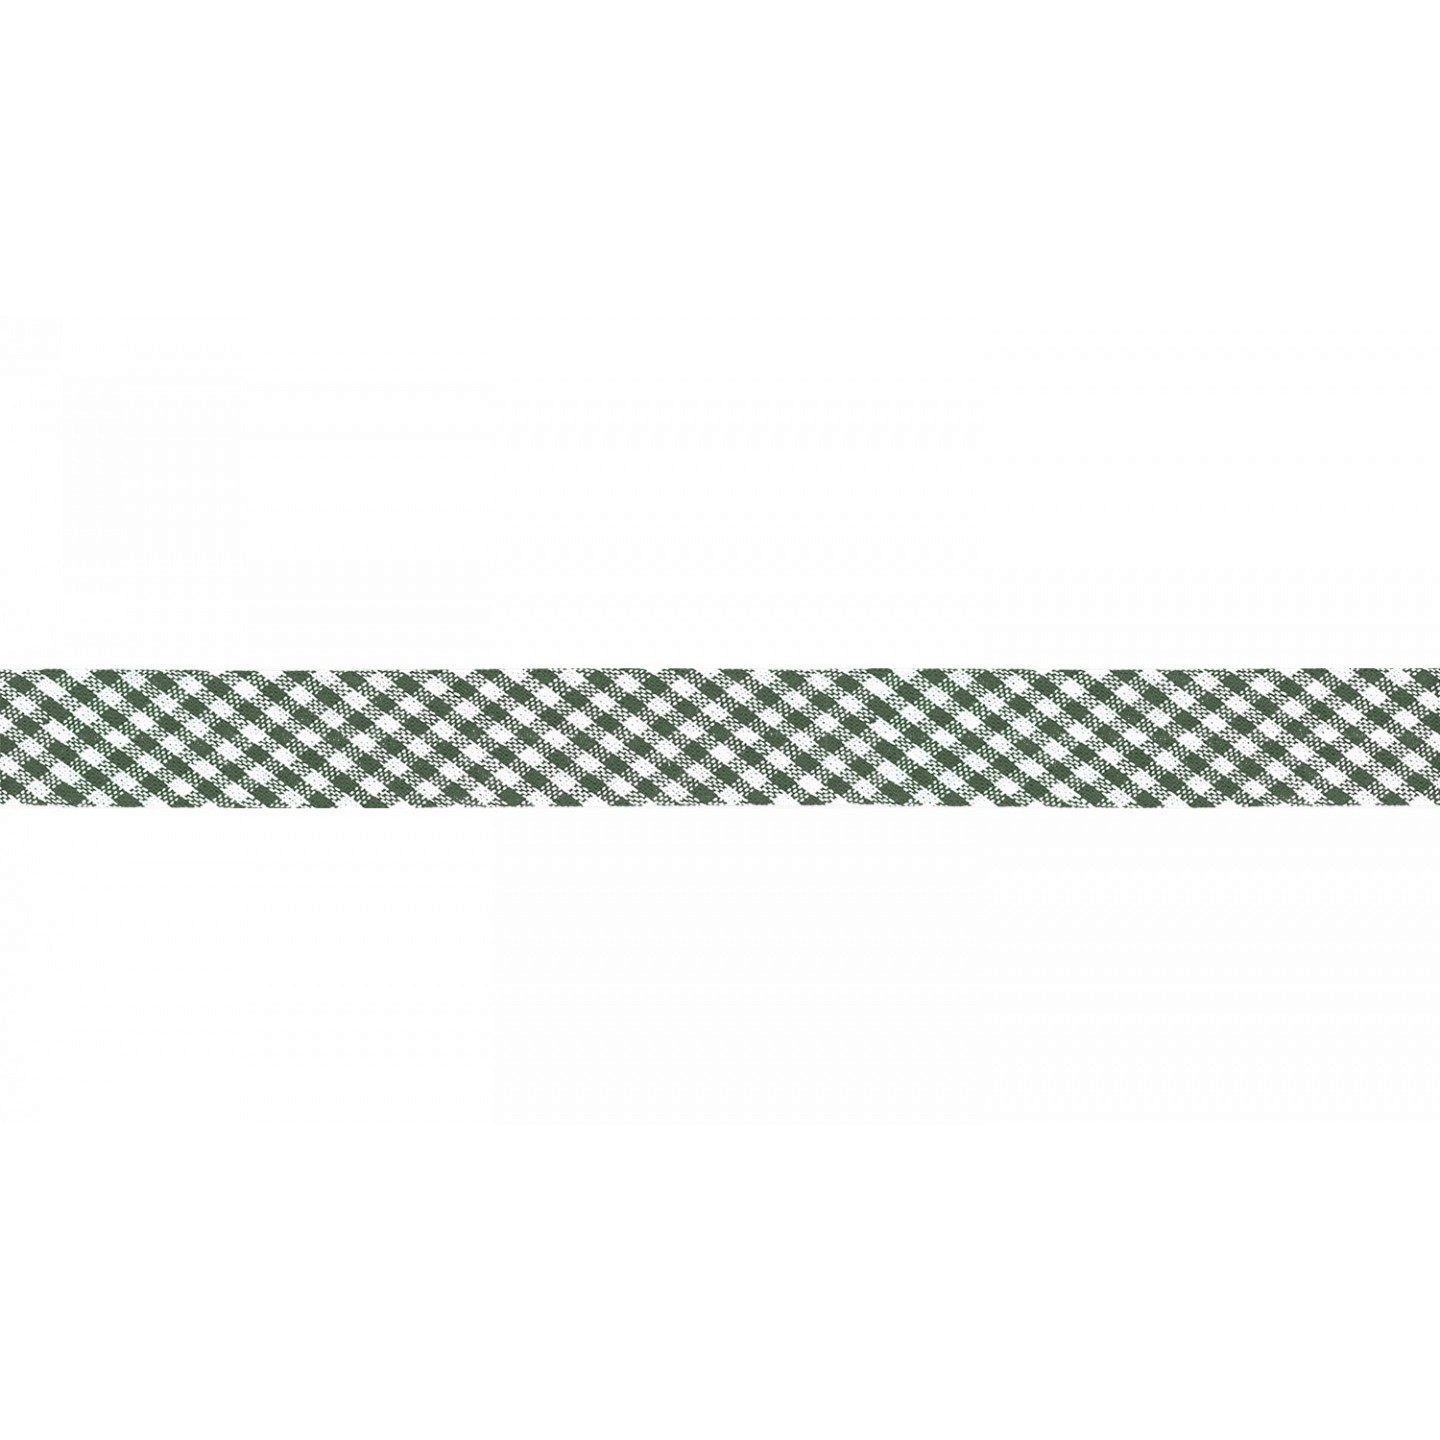 Schrägband gefalzt dunkelgrün/weiß kariert 20mm